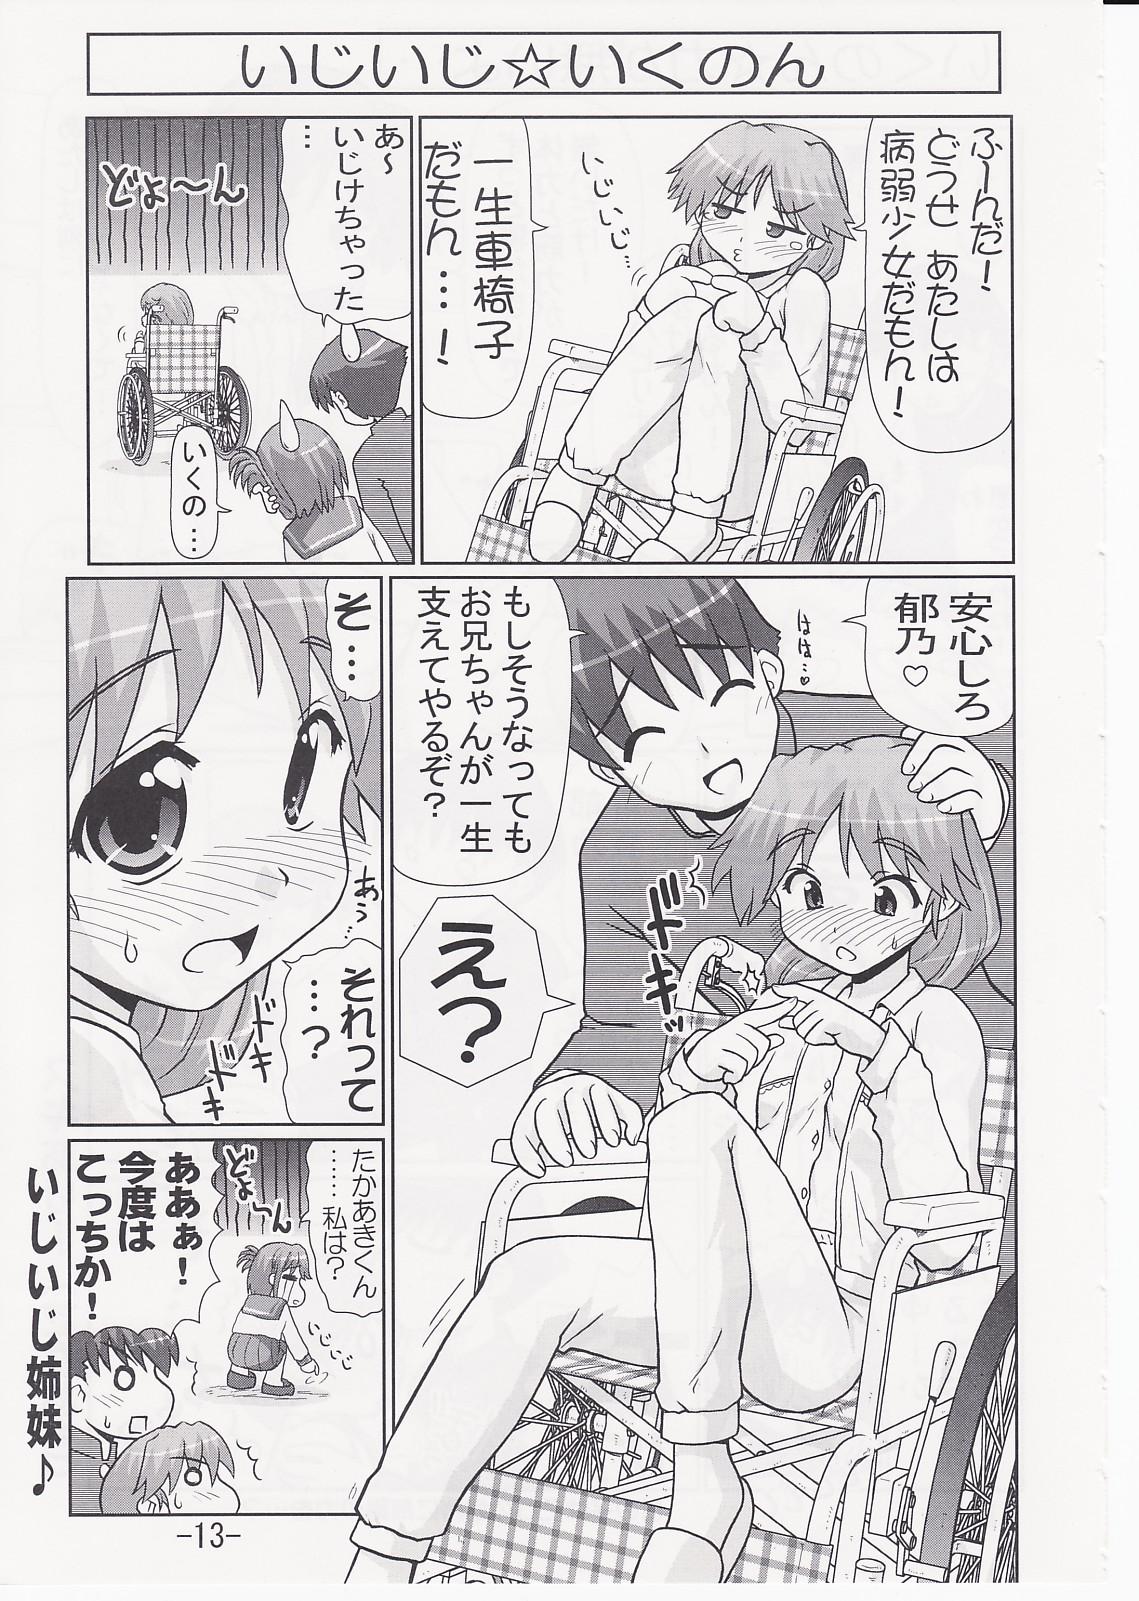 Jockstrap Ikunon Manga 2 - Toheart2 Calcinha - Page 12